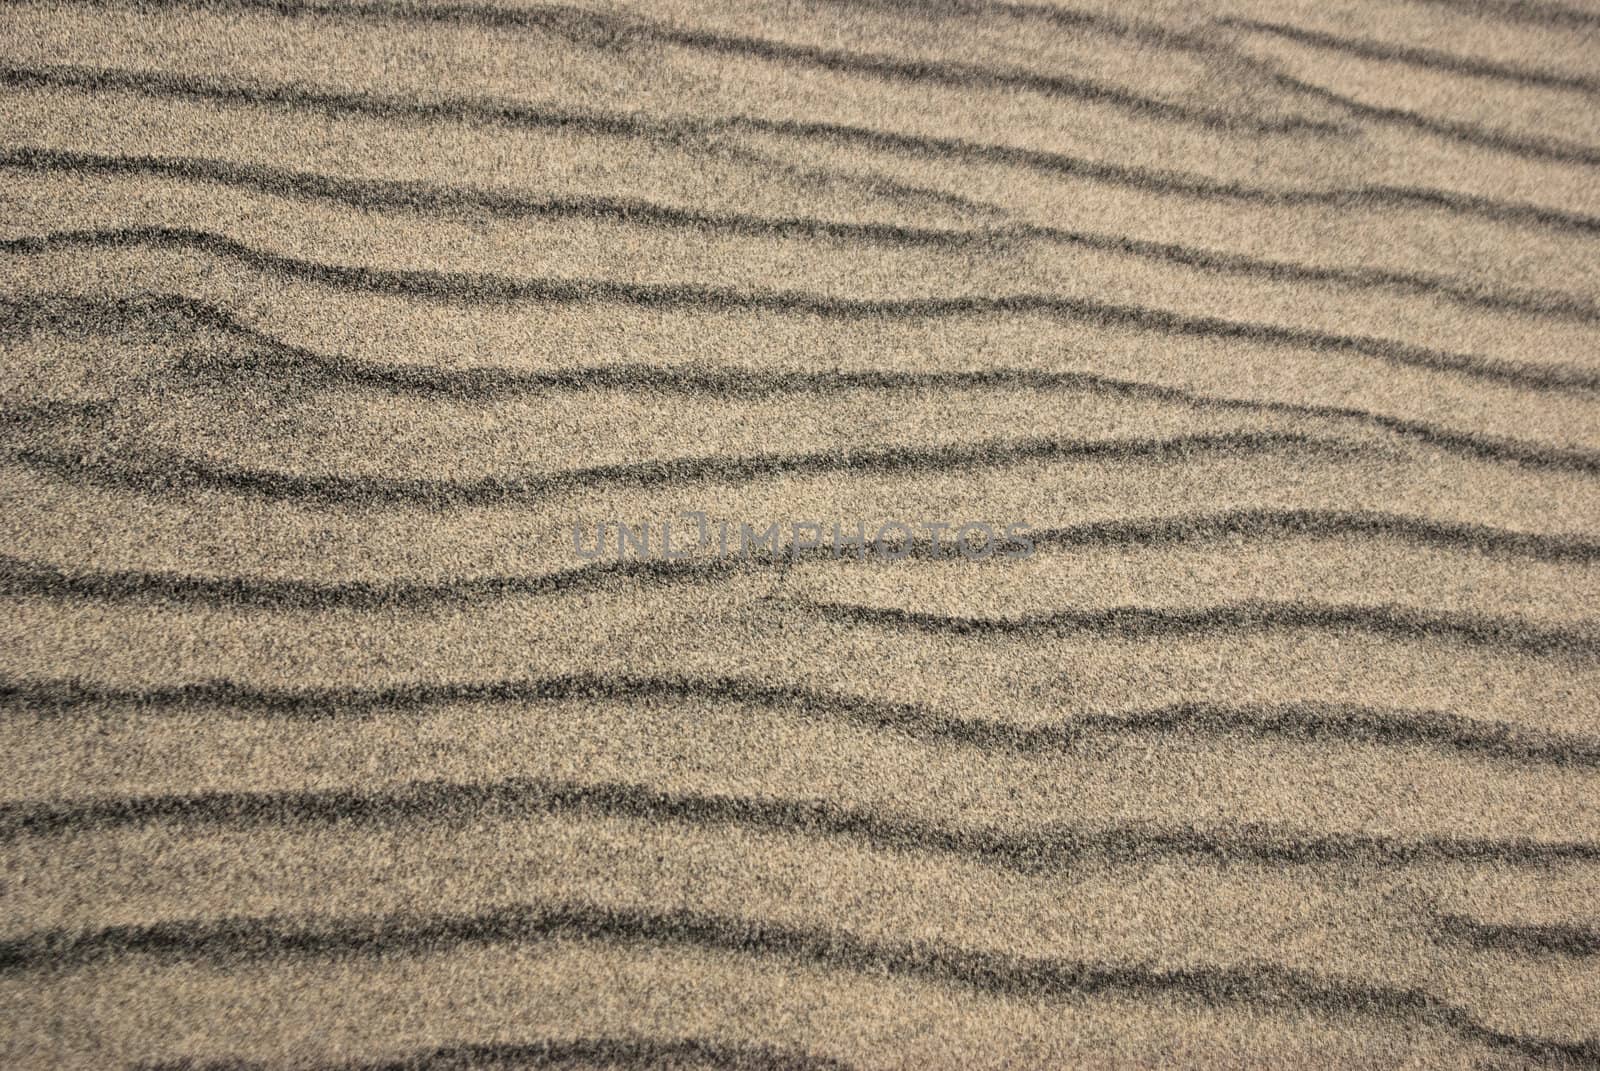 Sand Ridges by emattil